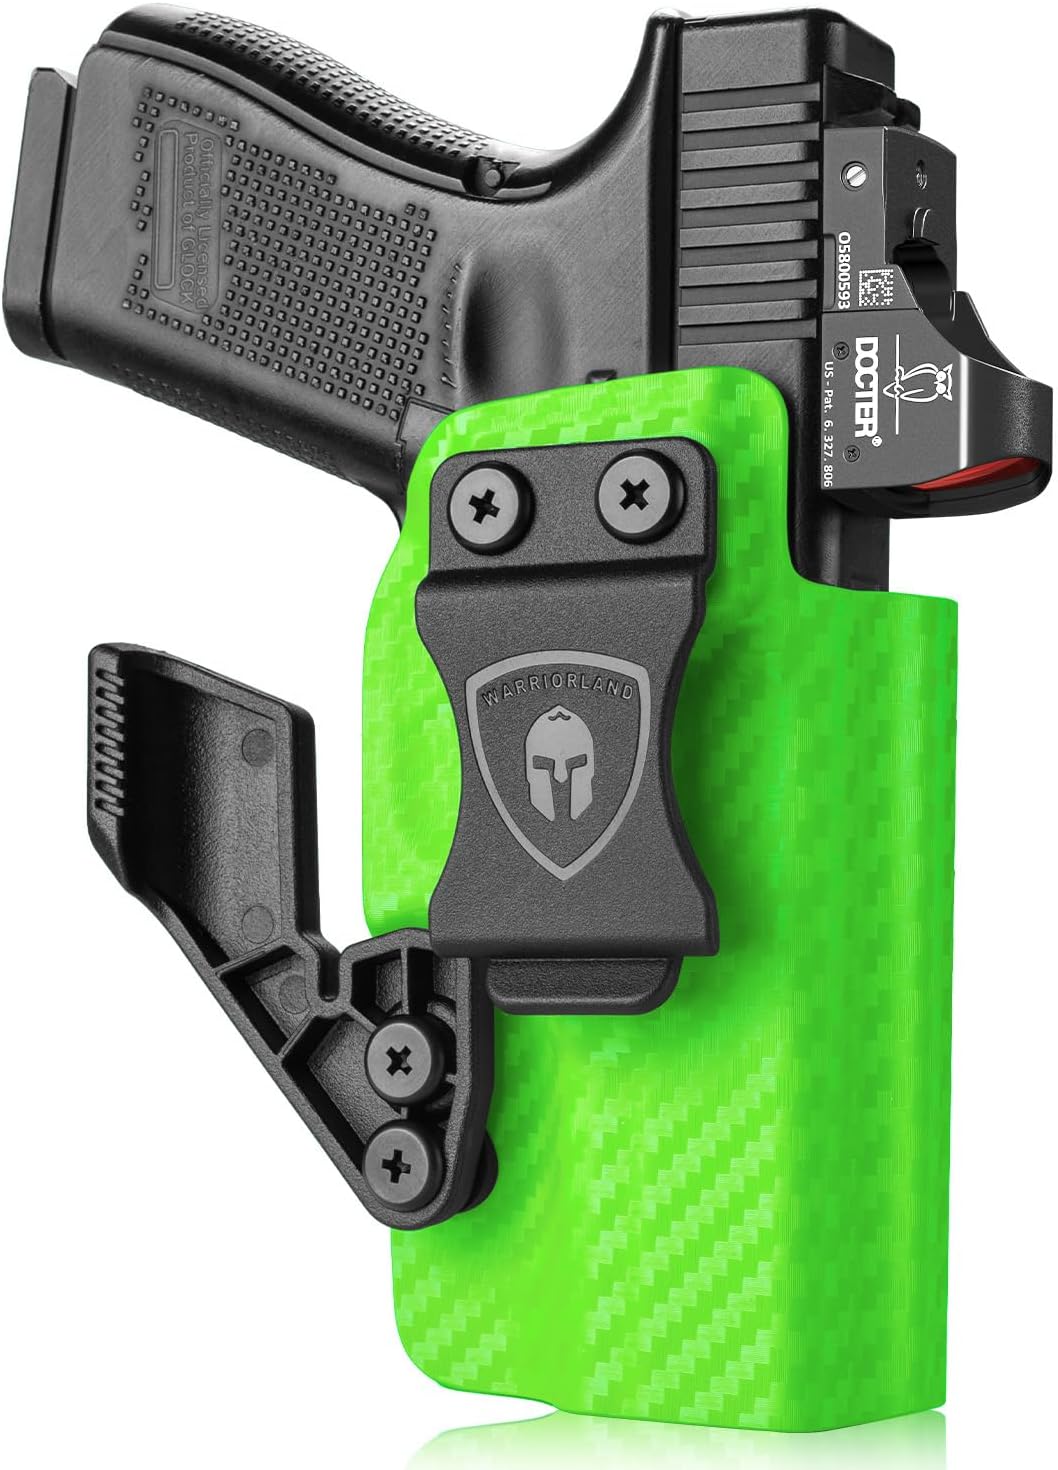 Glock17/19/19X/44/45 Gen(1-5) & Glock 23/32 Gen(3-4) IWB Carbon Fiber Kydex Holser,Red Dot Optics Cut, Wing/Claw Conceal Carry| WARRIORLAND